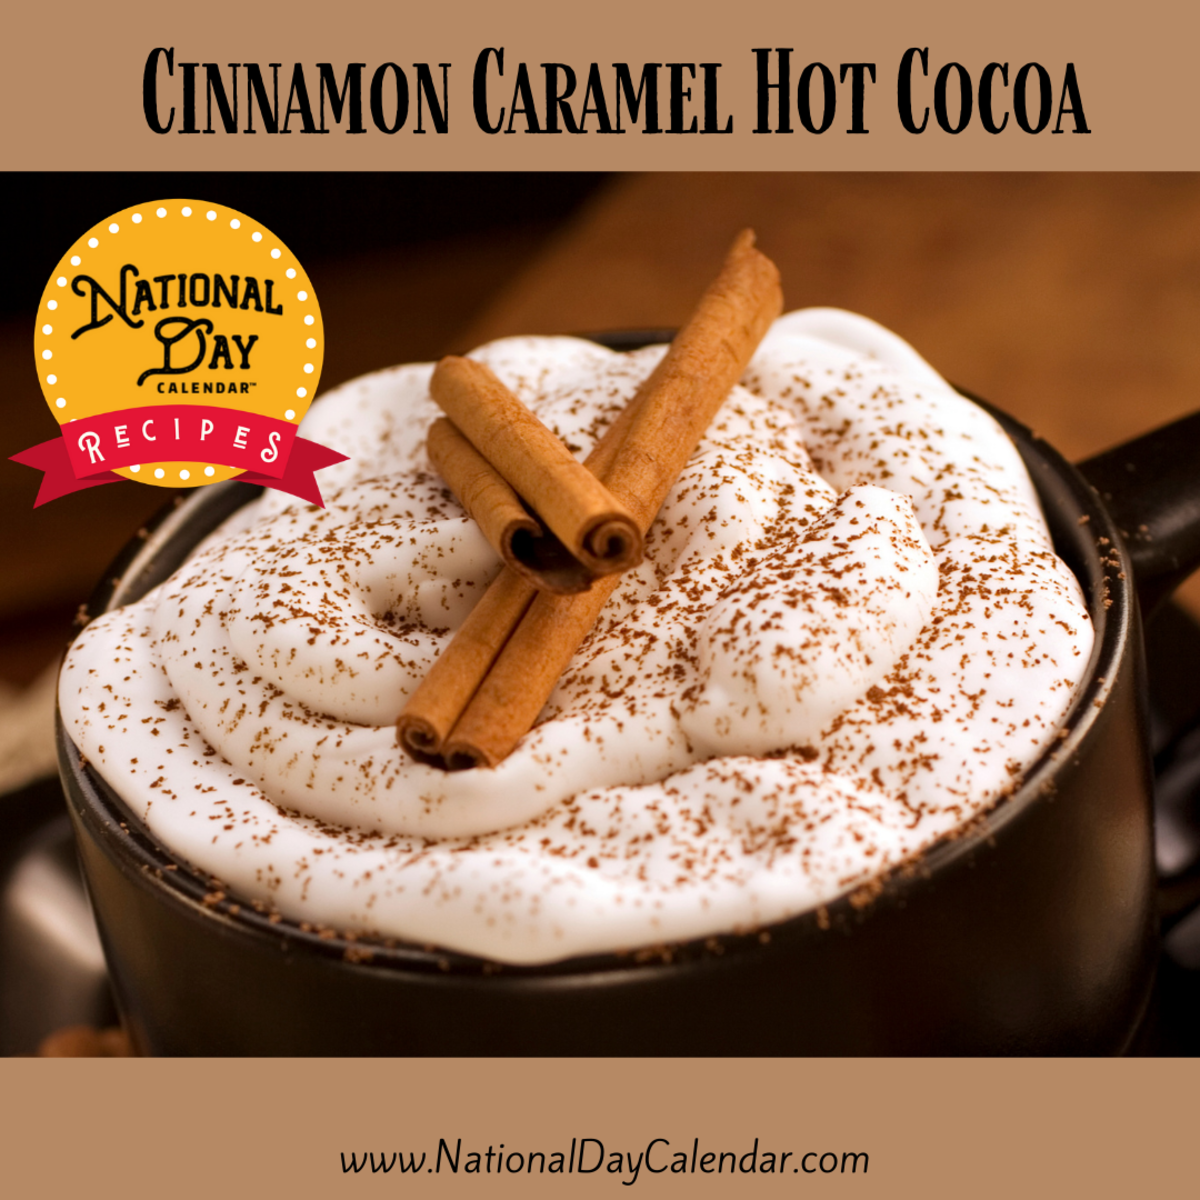 Cinnamon Caramel Hot Cocoa Recipe